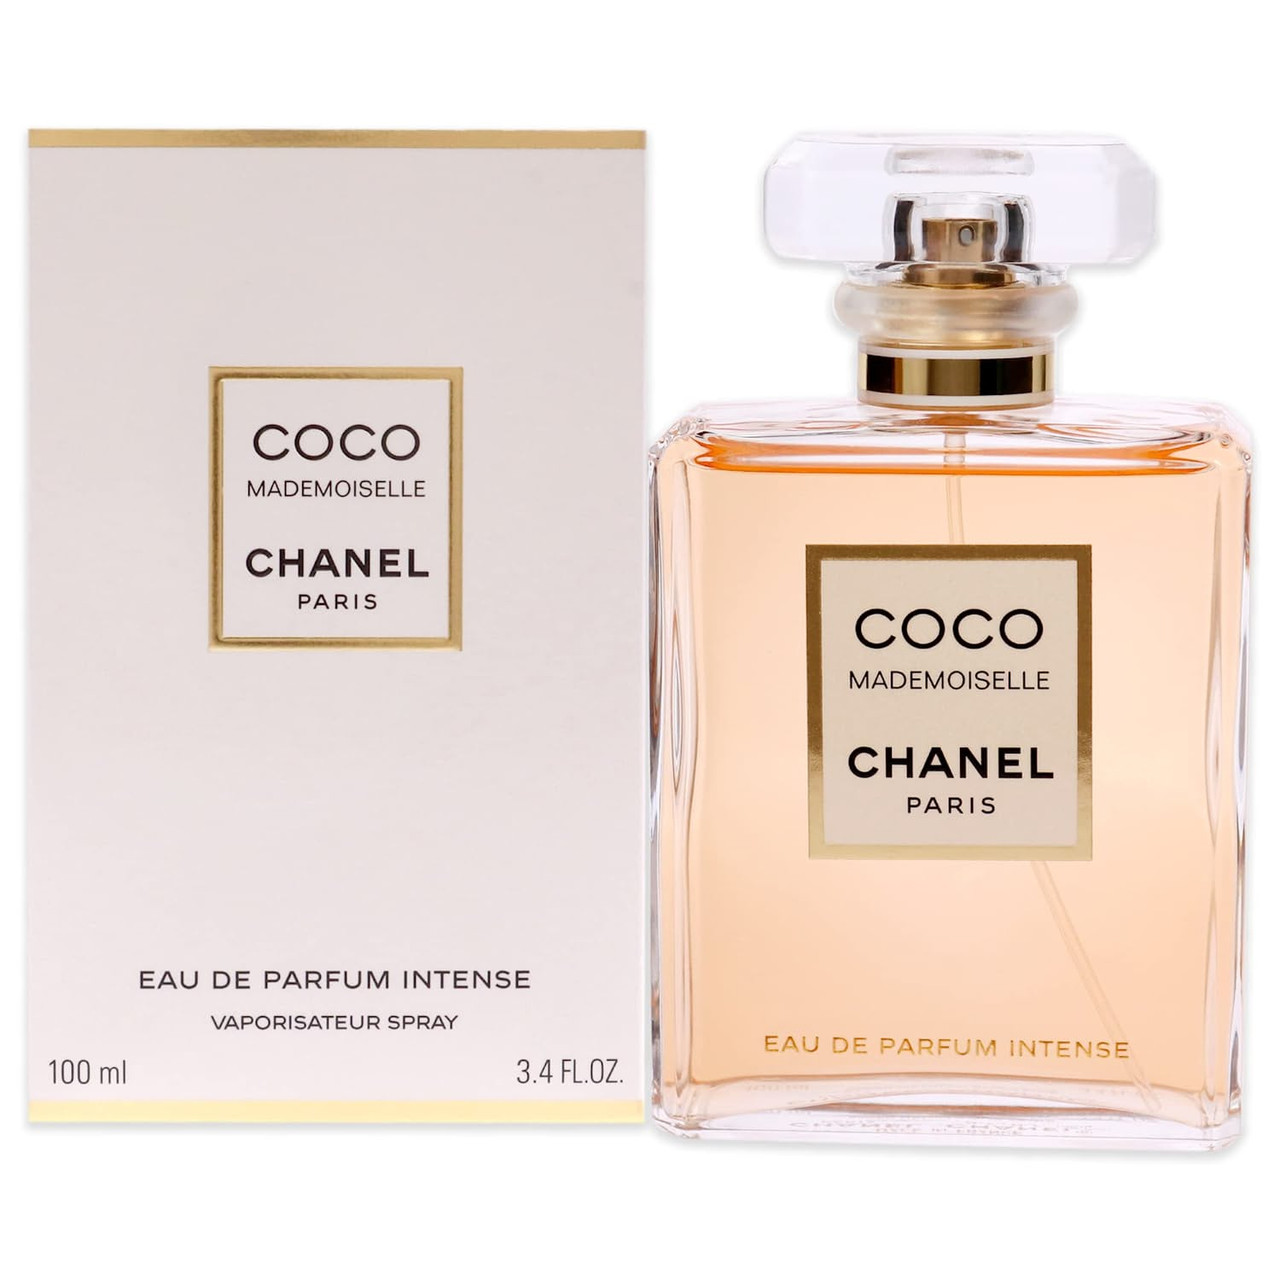  No. 5 by Chanel for Women, Eau De Parfum Spray, 3.4